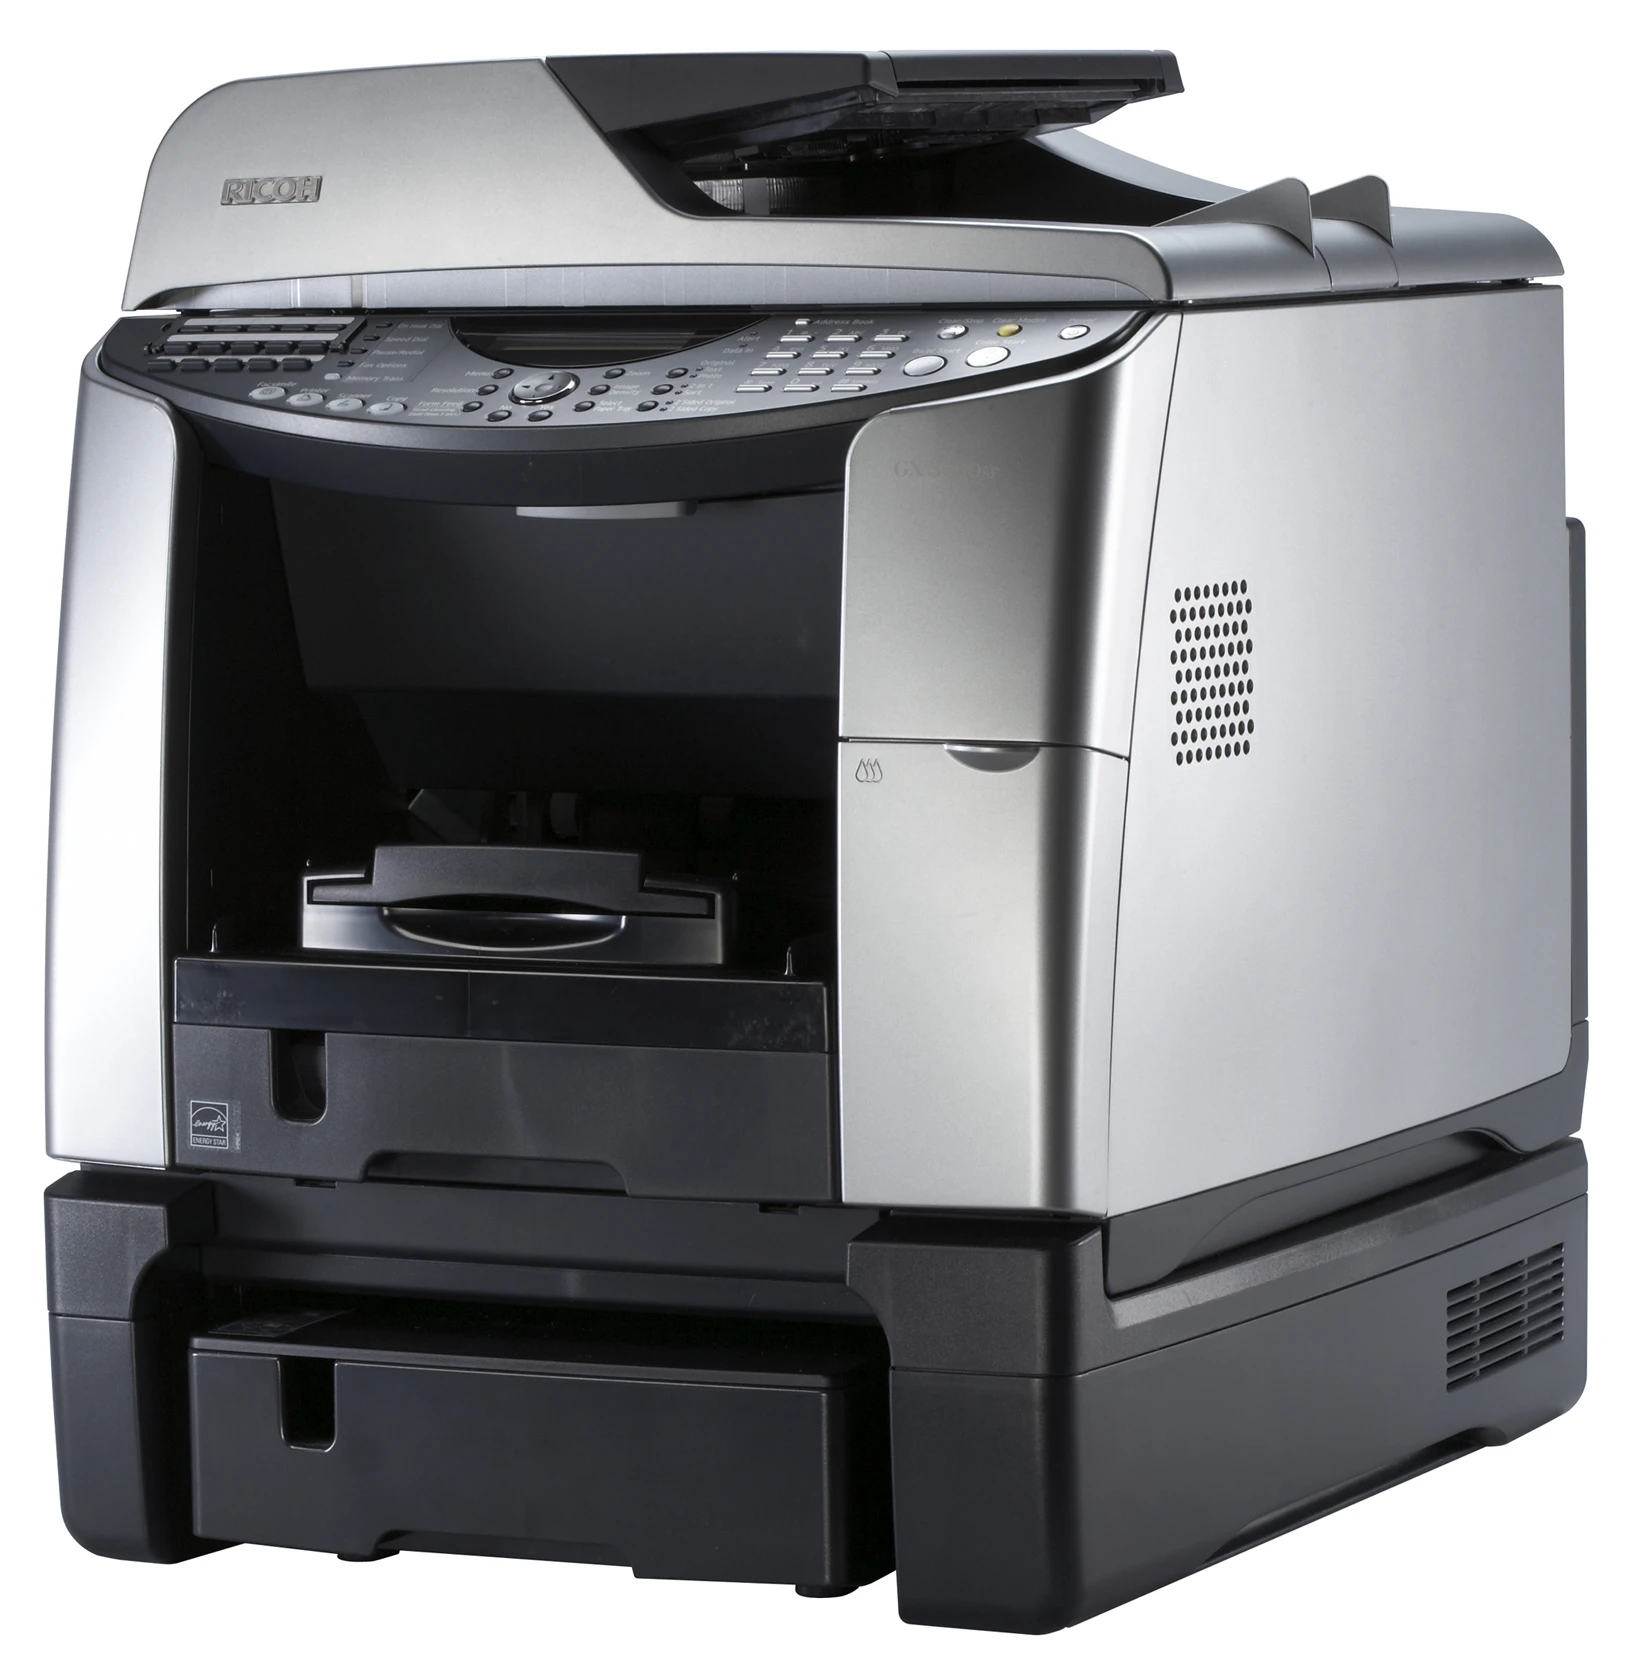 Gel multifunkcijska naprava Ricoh Aficio GX-3050 SFN, gx-3050sfn,gx 3050,gx-3050,gel tiskalnik